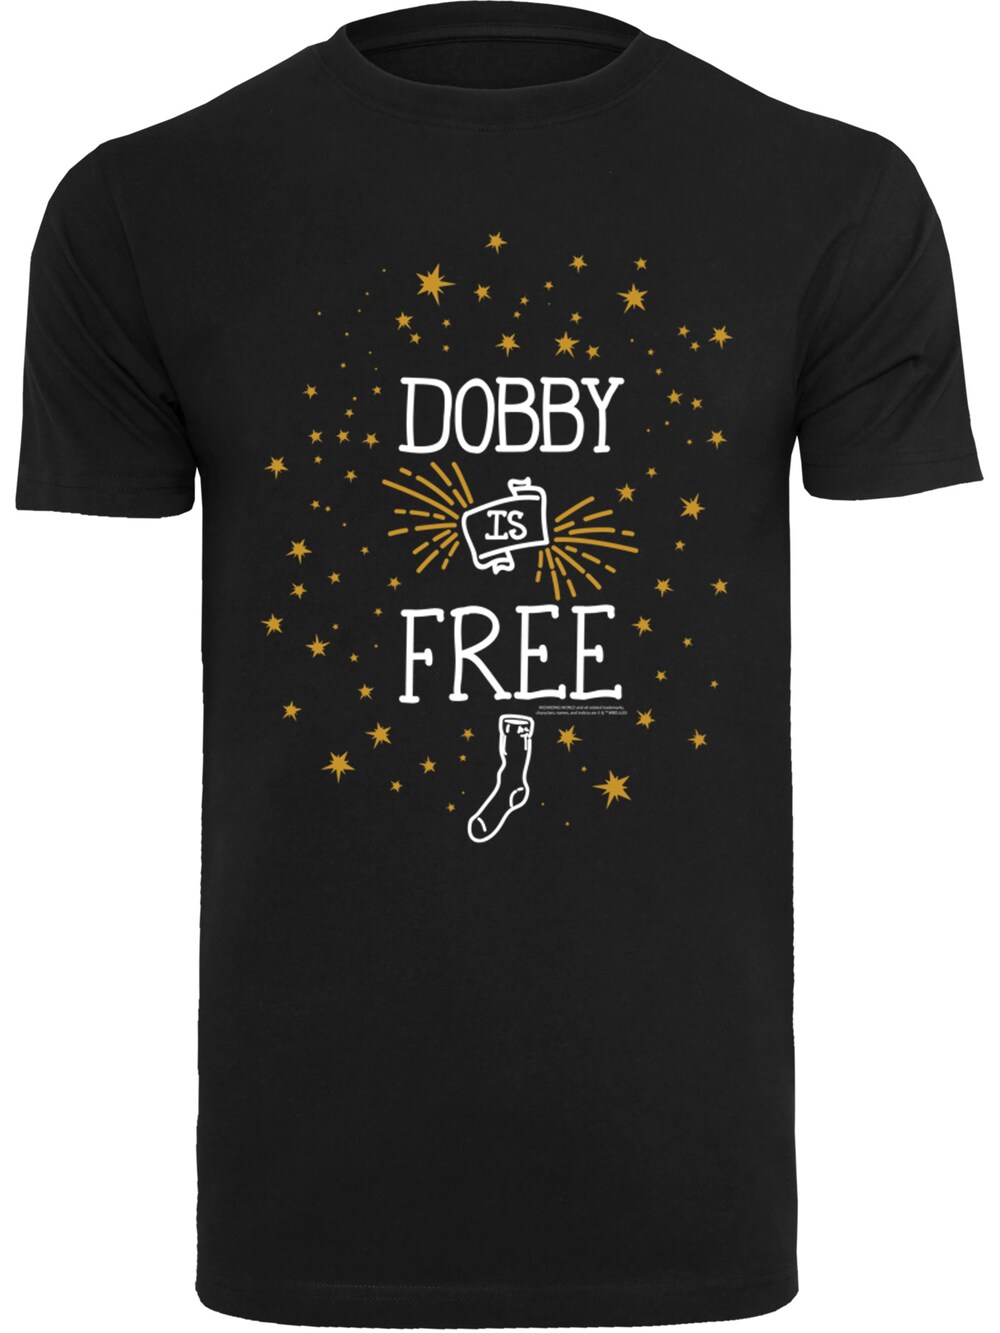 Футболка F4Nt4Stic Harry Potter Dobby Is Free, черный сумка шоппер harry potter dobby is free